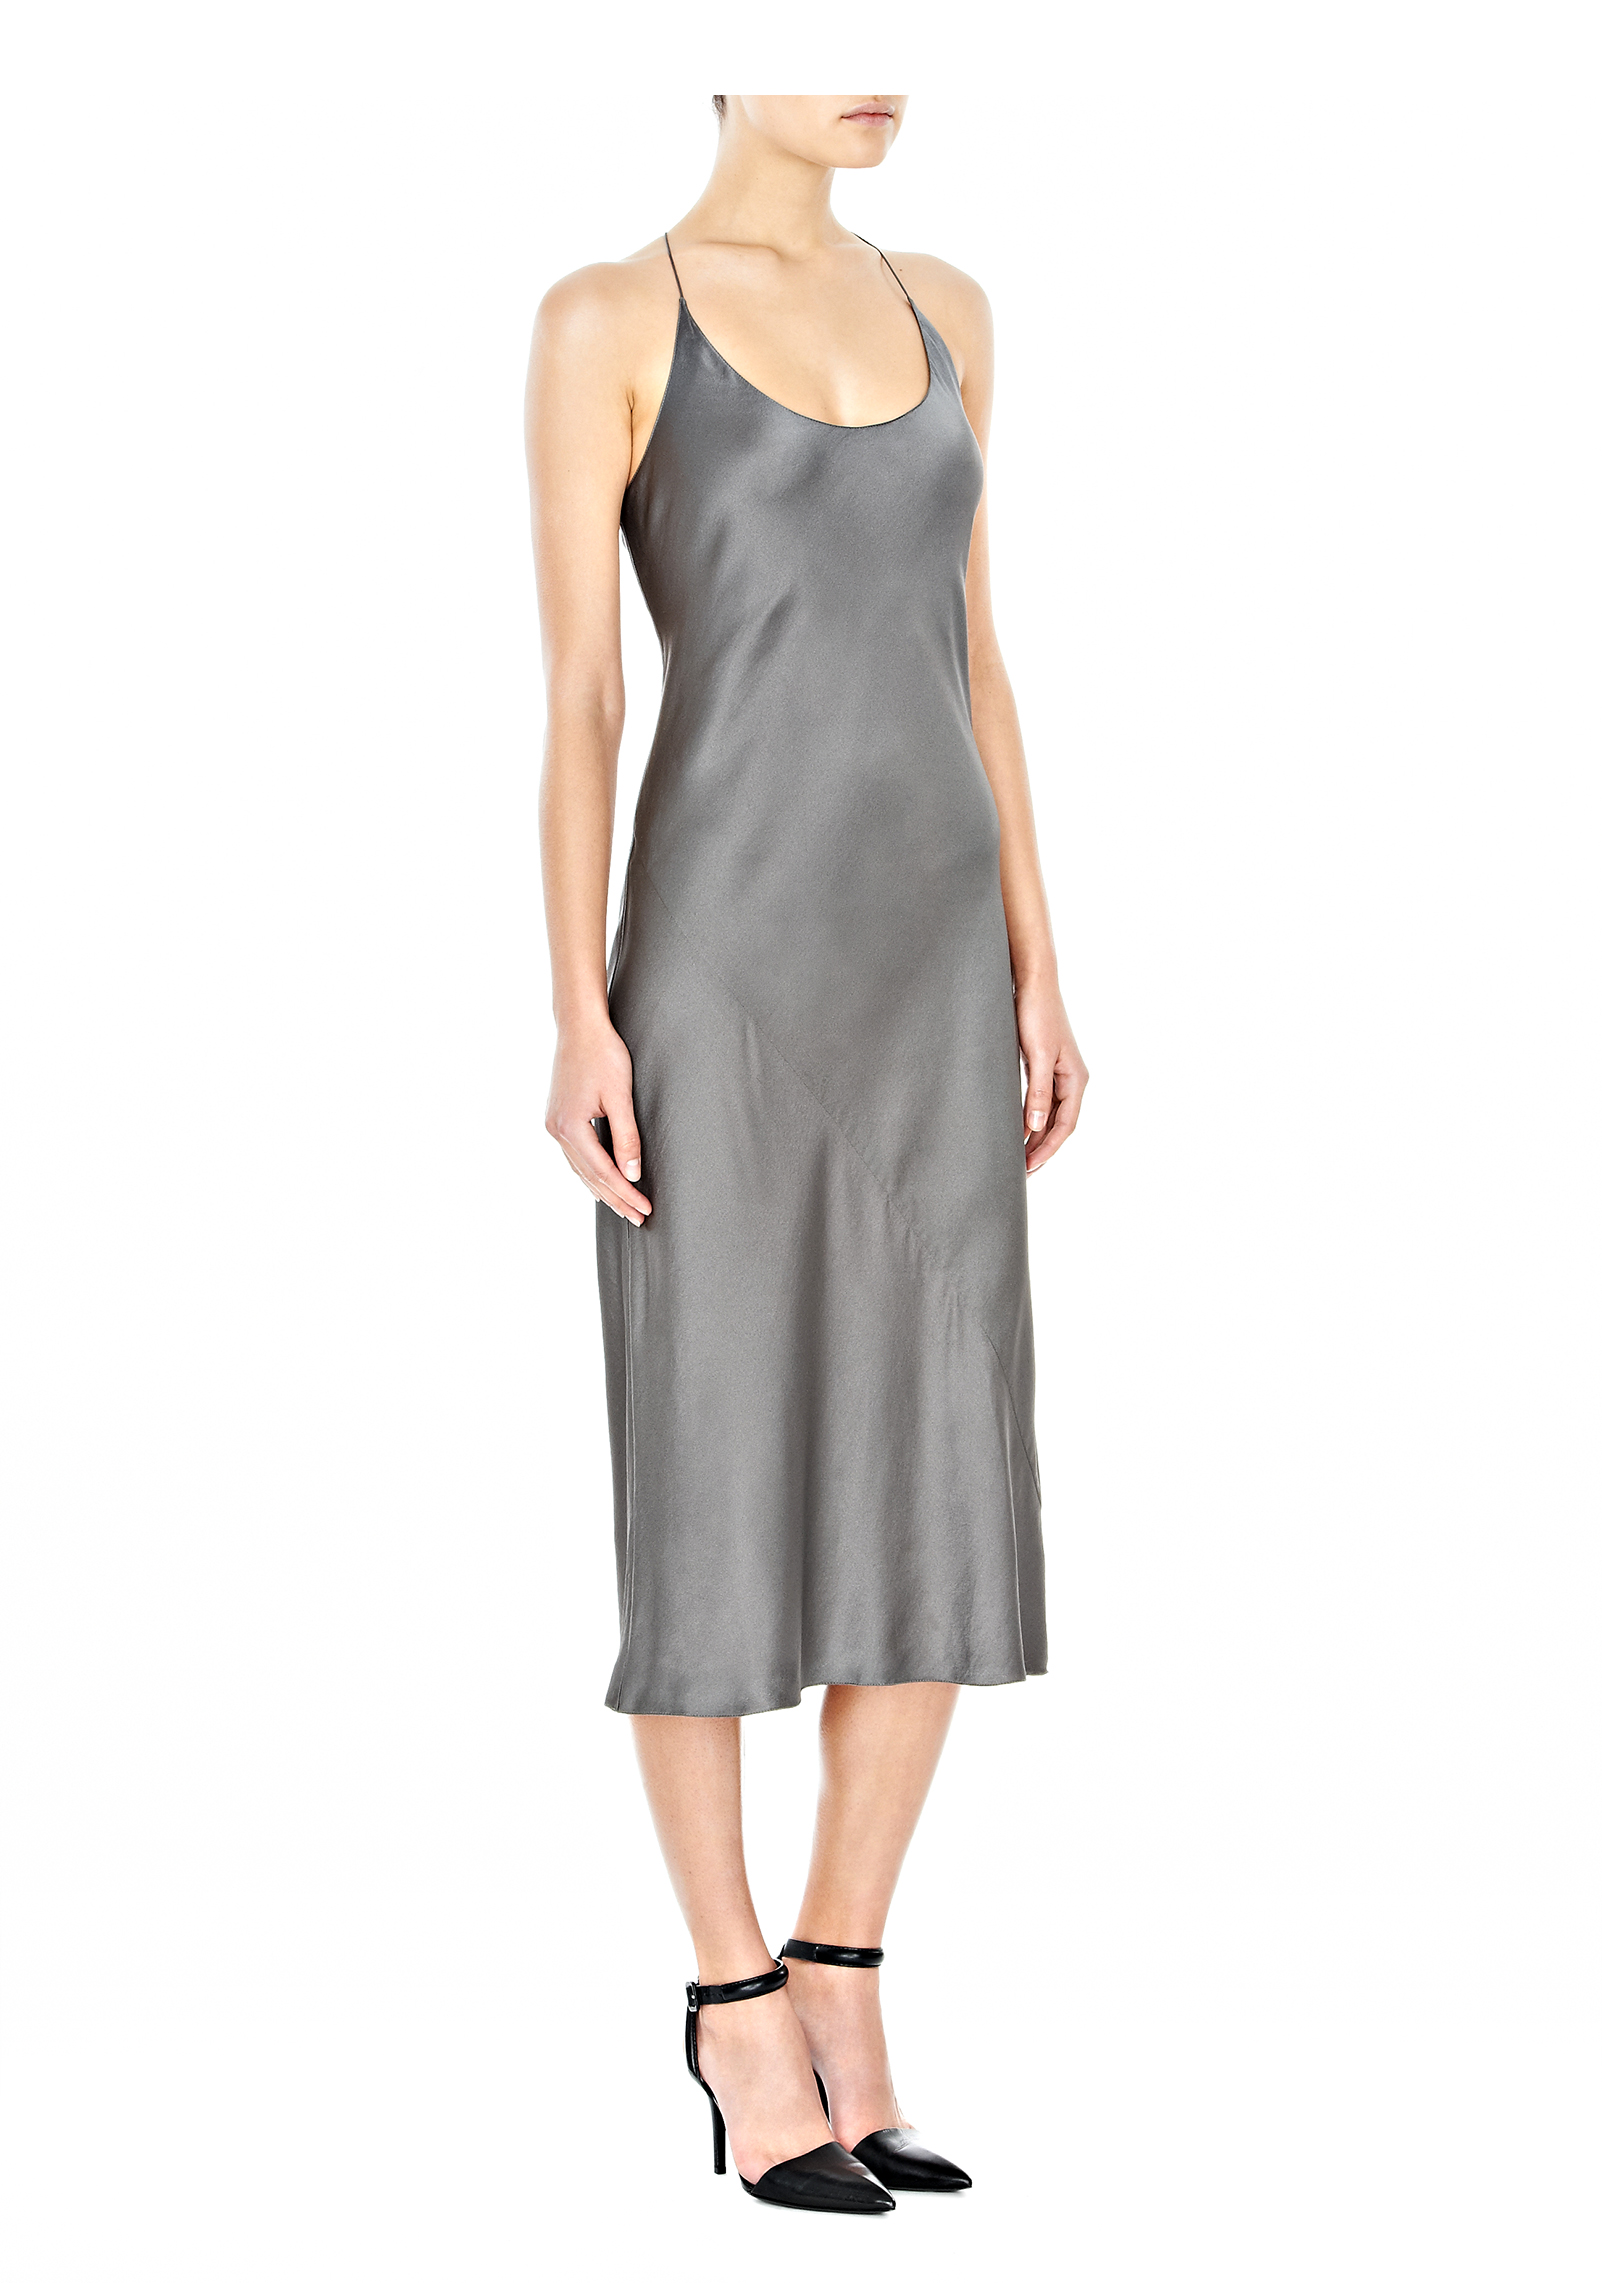 Alexander Wang Silk Satin Slip Dress in Gray | Lyst